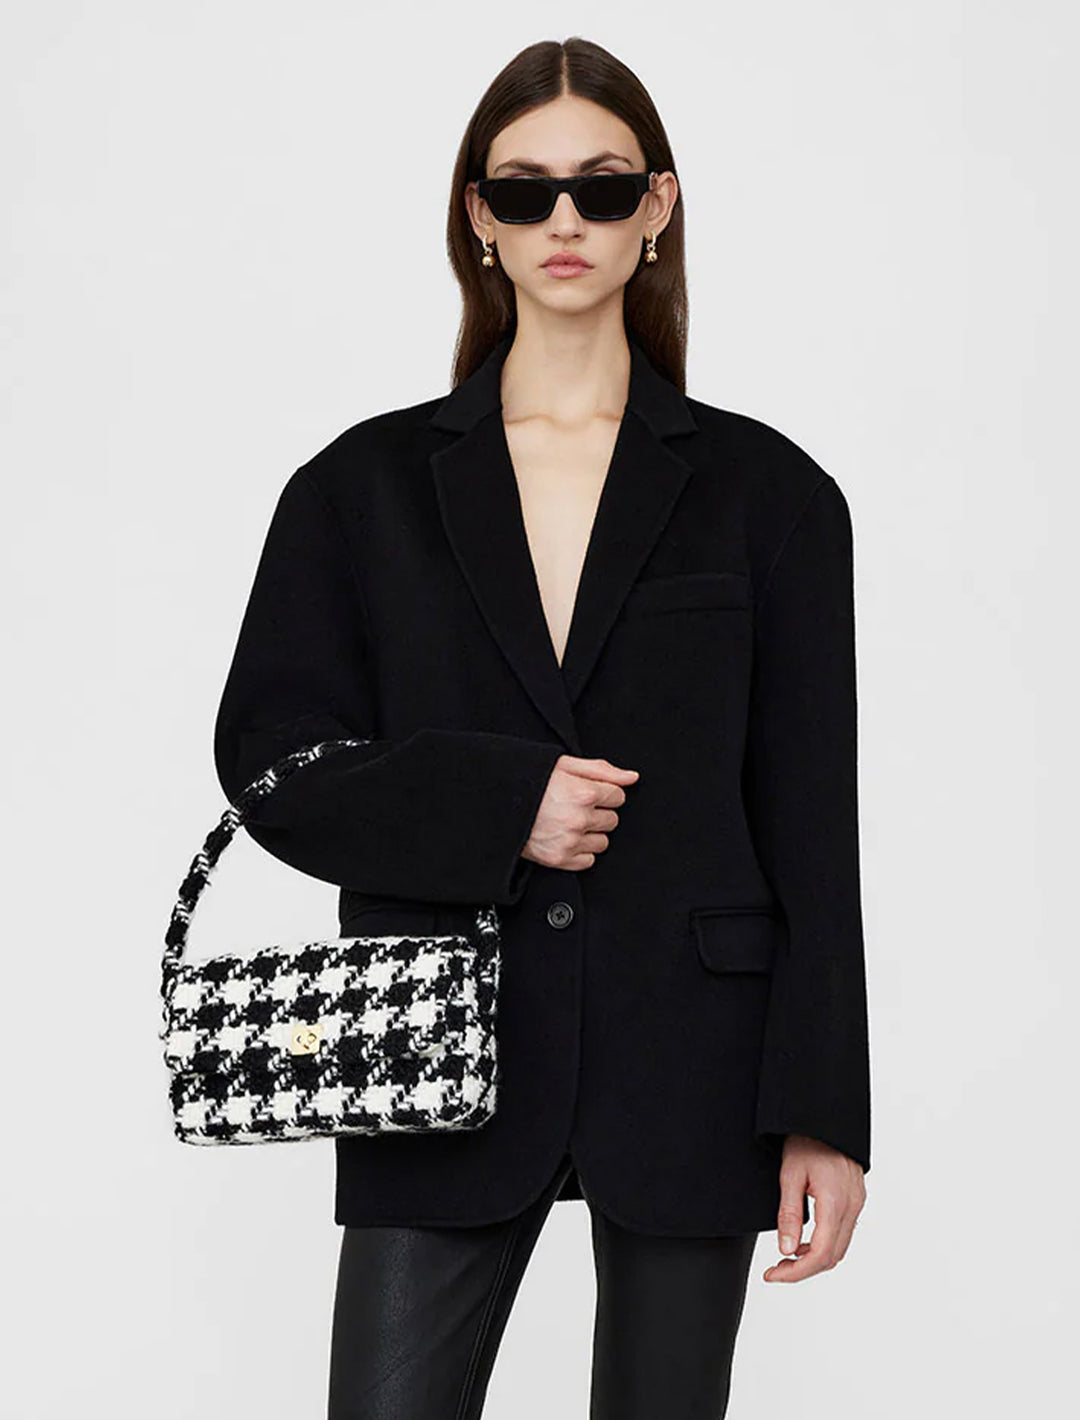 Model holding Anine Bing's nico handbag in black and white houndstooth.